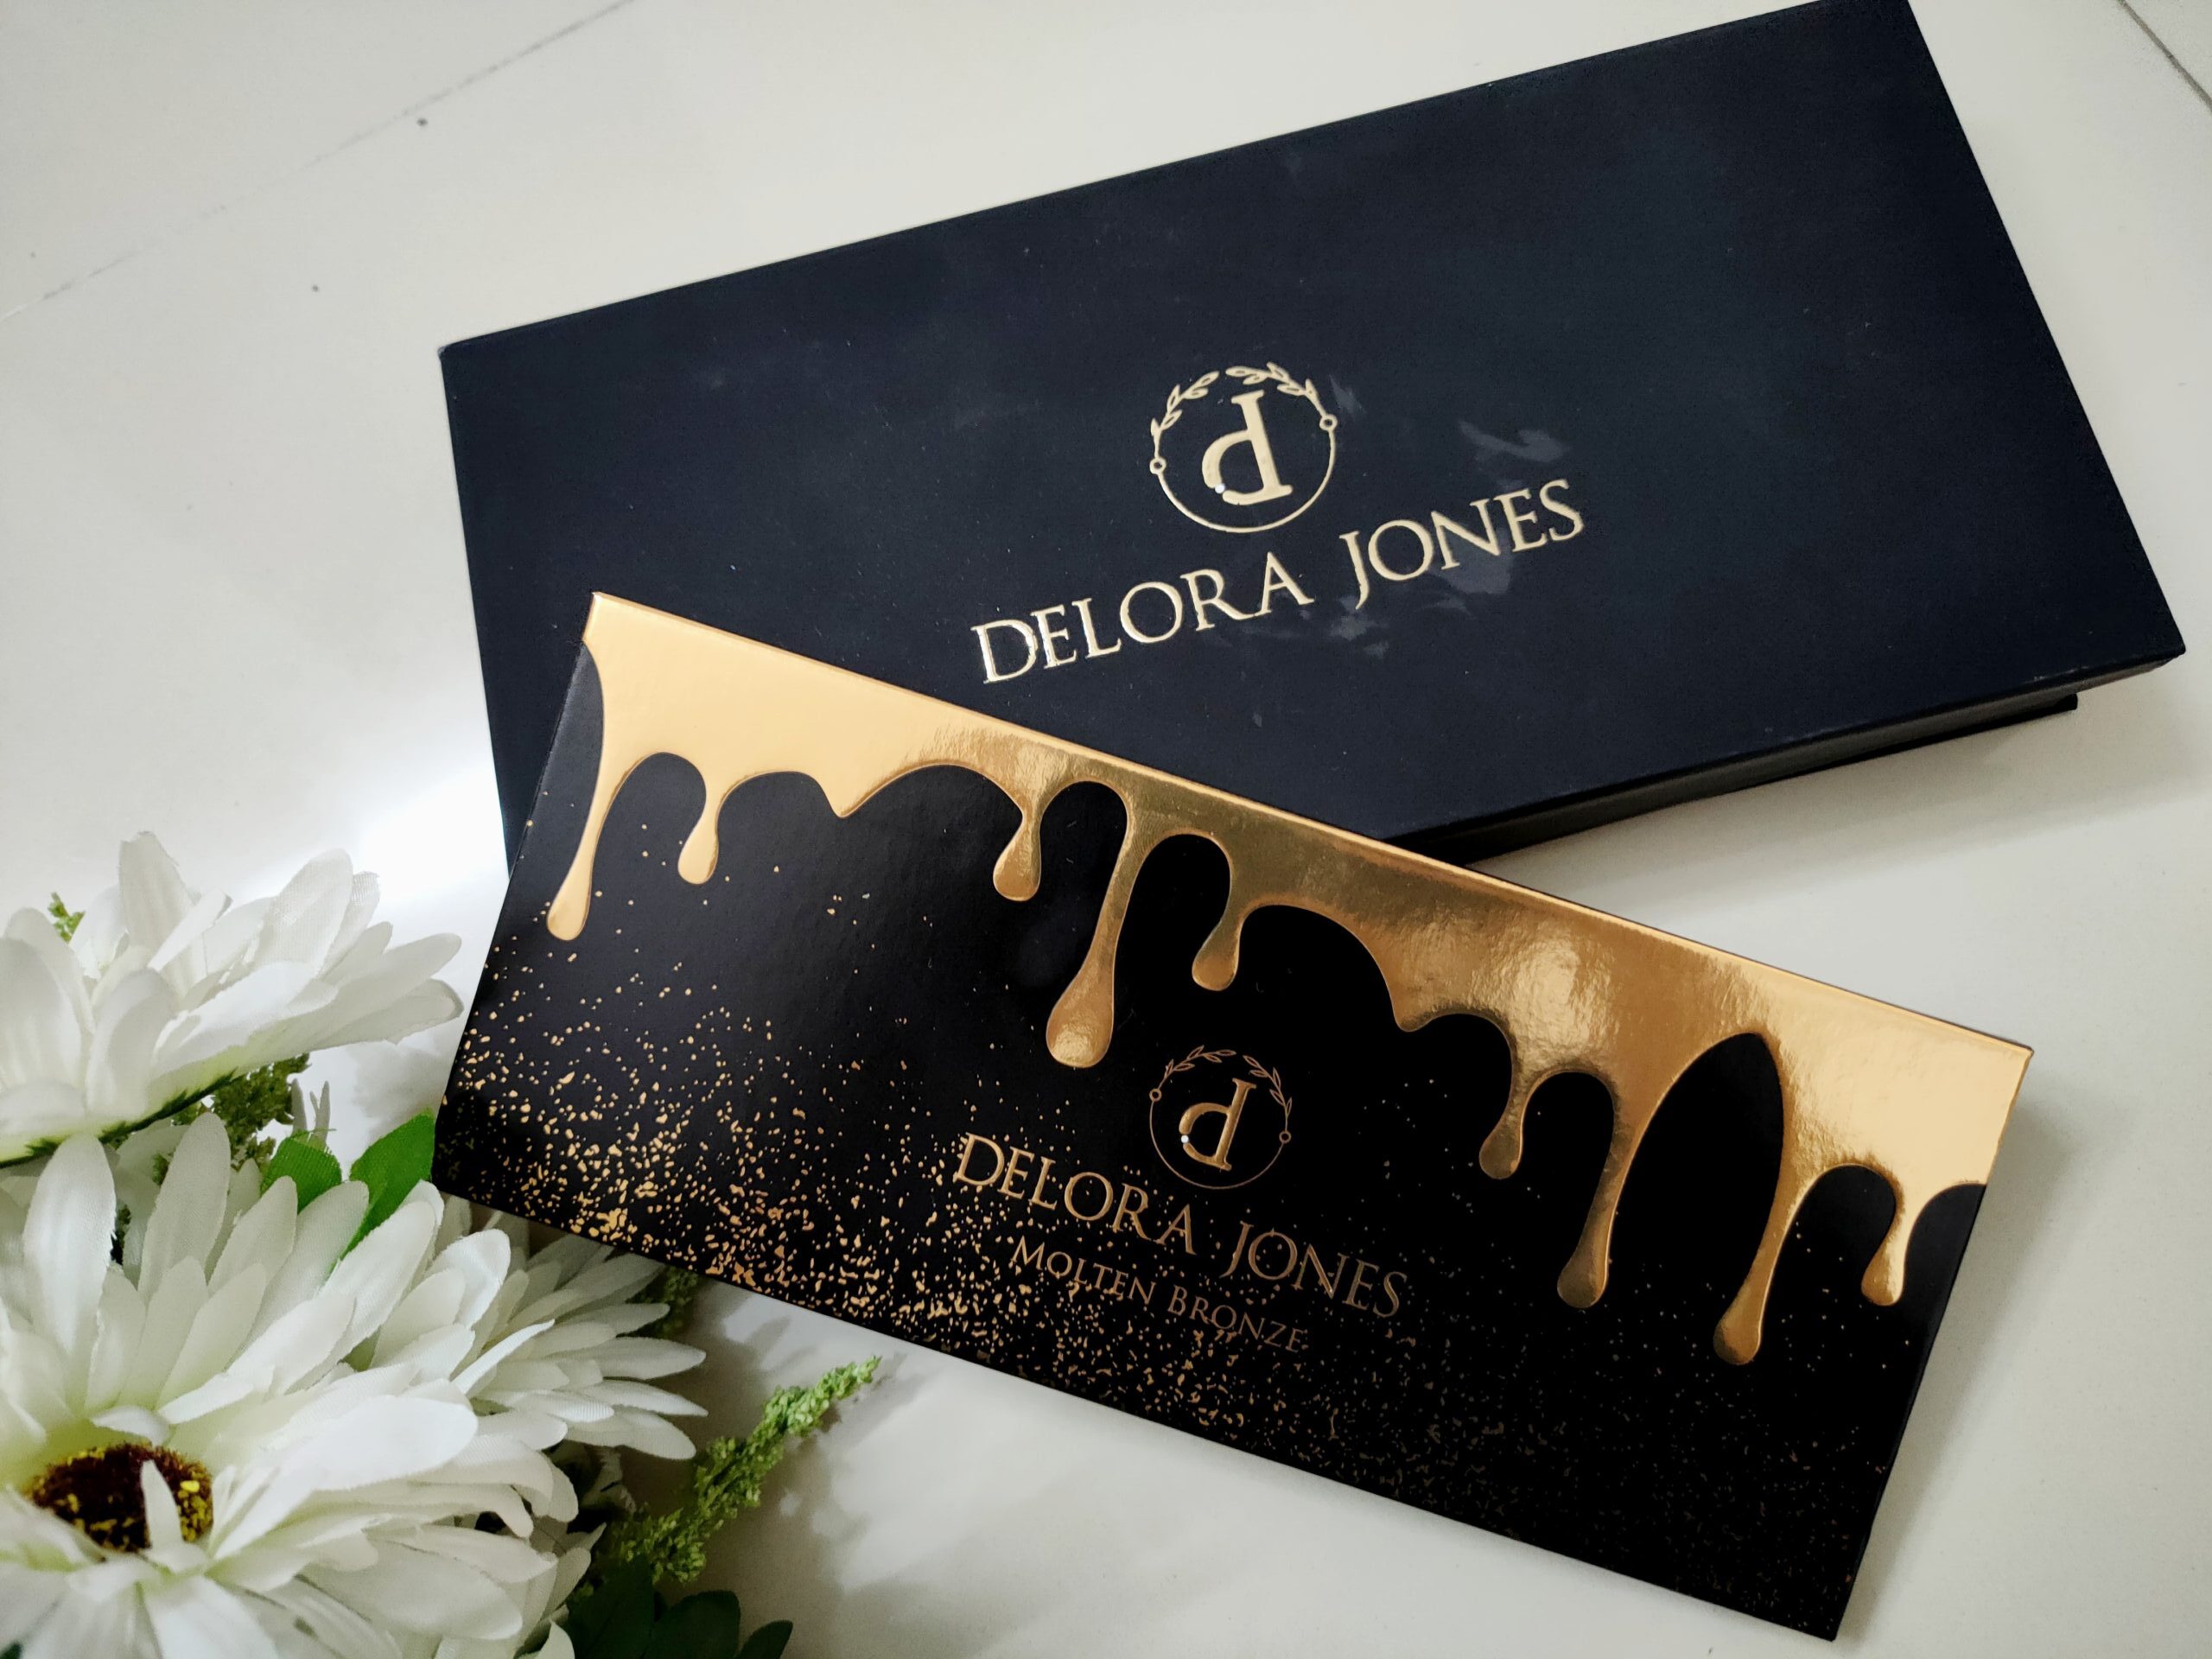 Delora Jones Molten Bronze Eyeshadow Palette